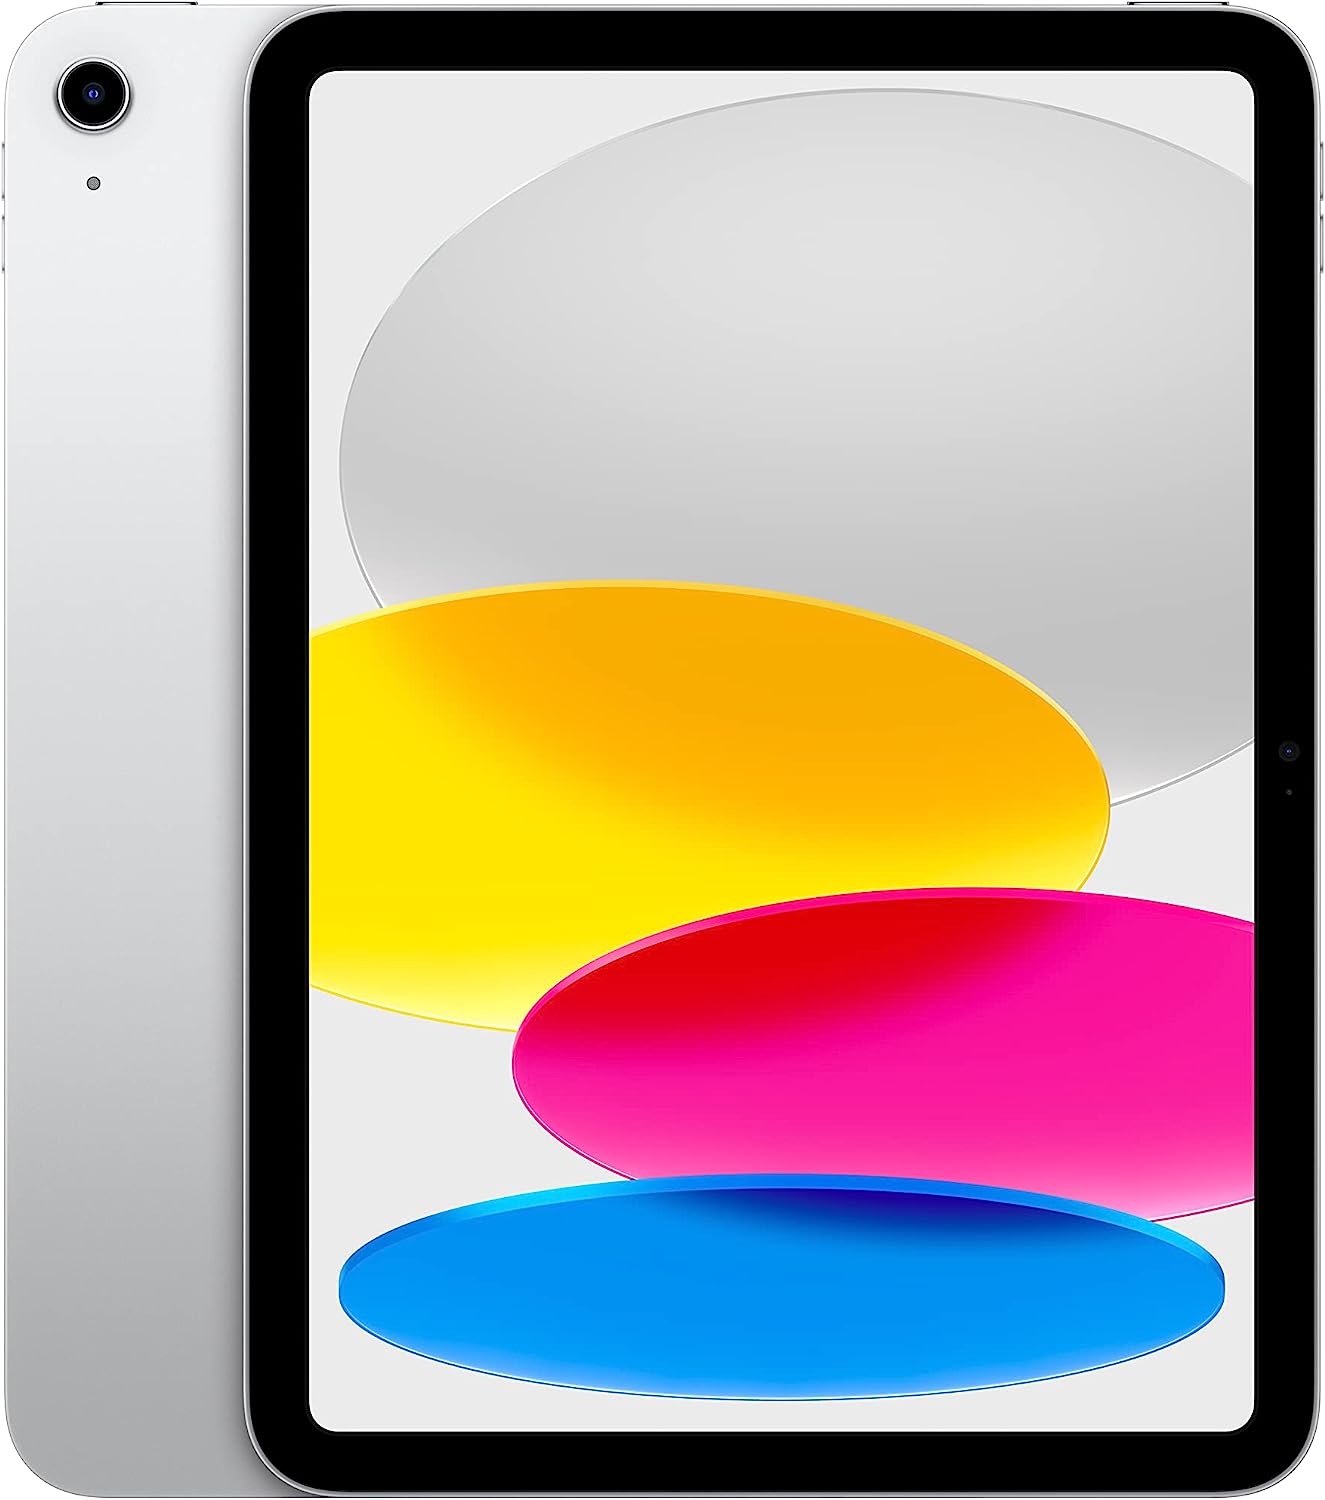 Apple iPad (10th Generation), 64gb, wi-fi, various colors - $334 @ Amazon